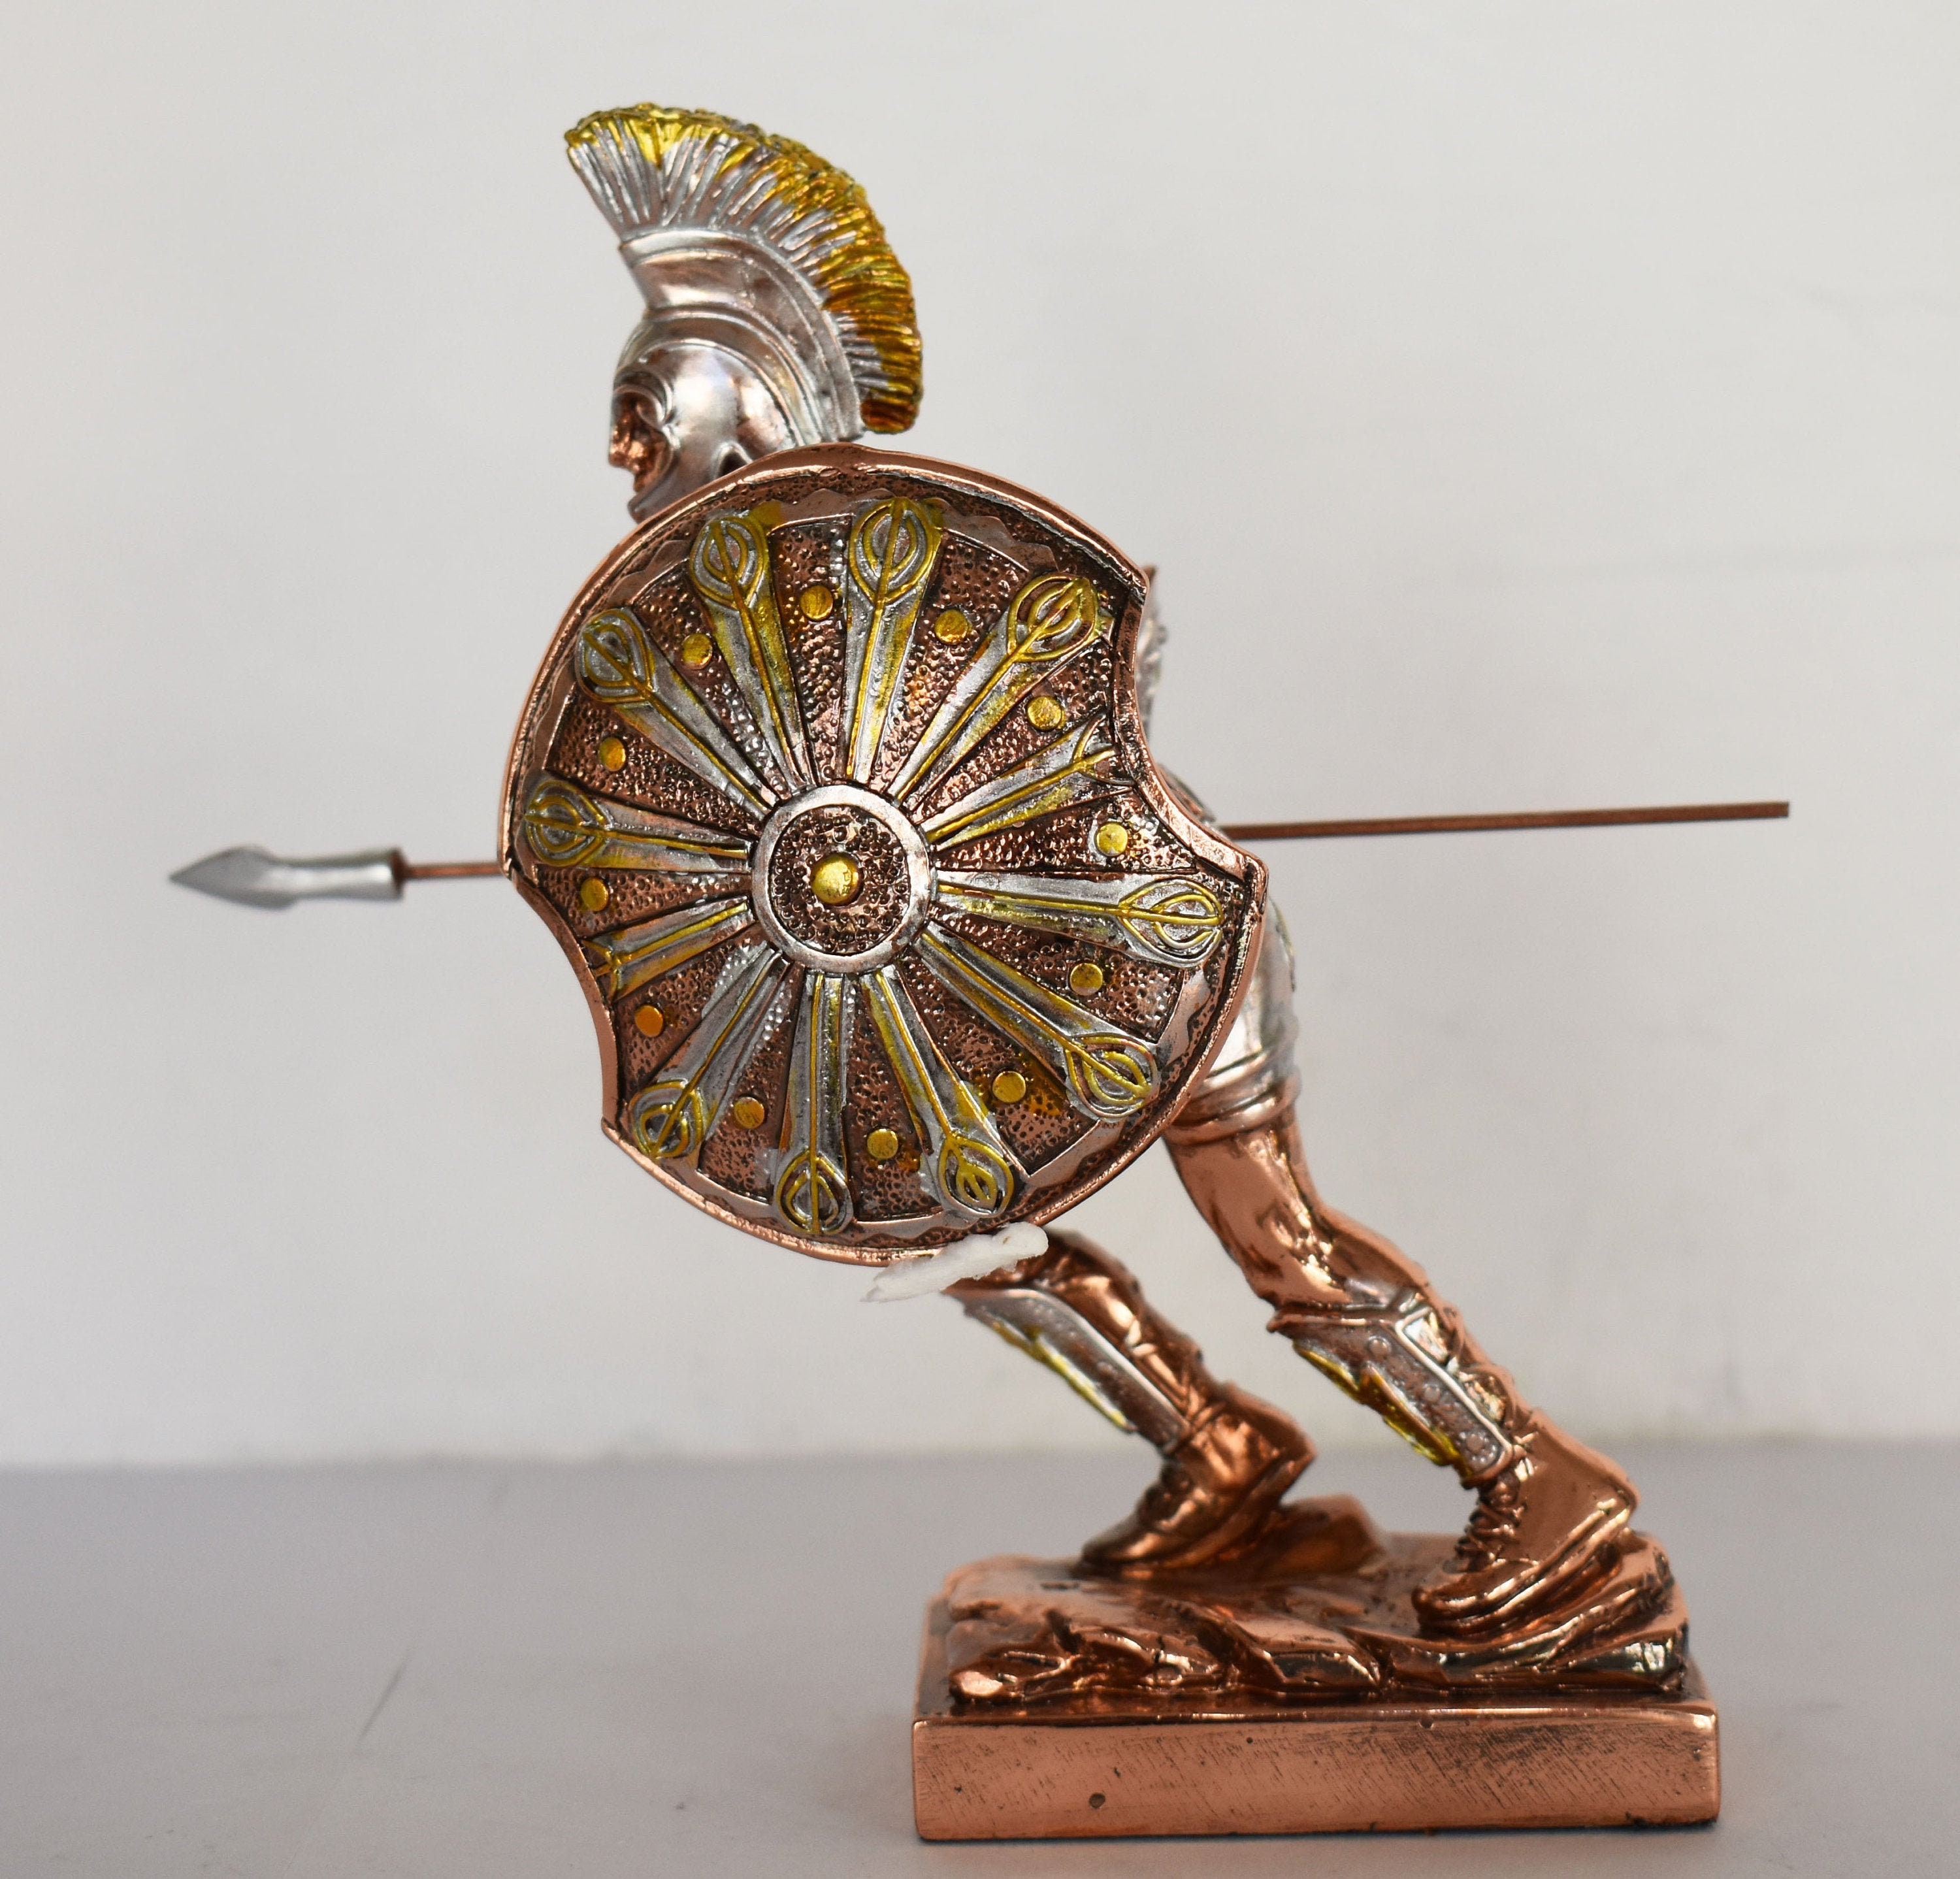 Achilles King of the Myrmidons Legendary Greek Hero Son of Thetis and  Peleus Trojan War Homer's Iliad Copper Plated Alabaster 